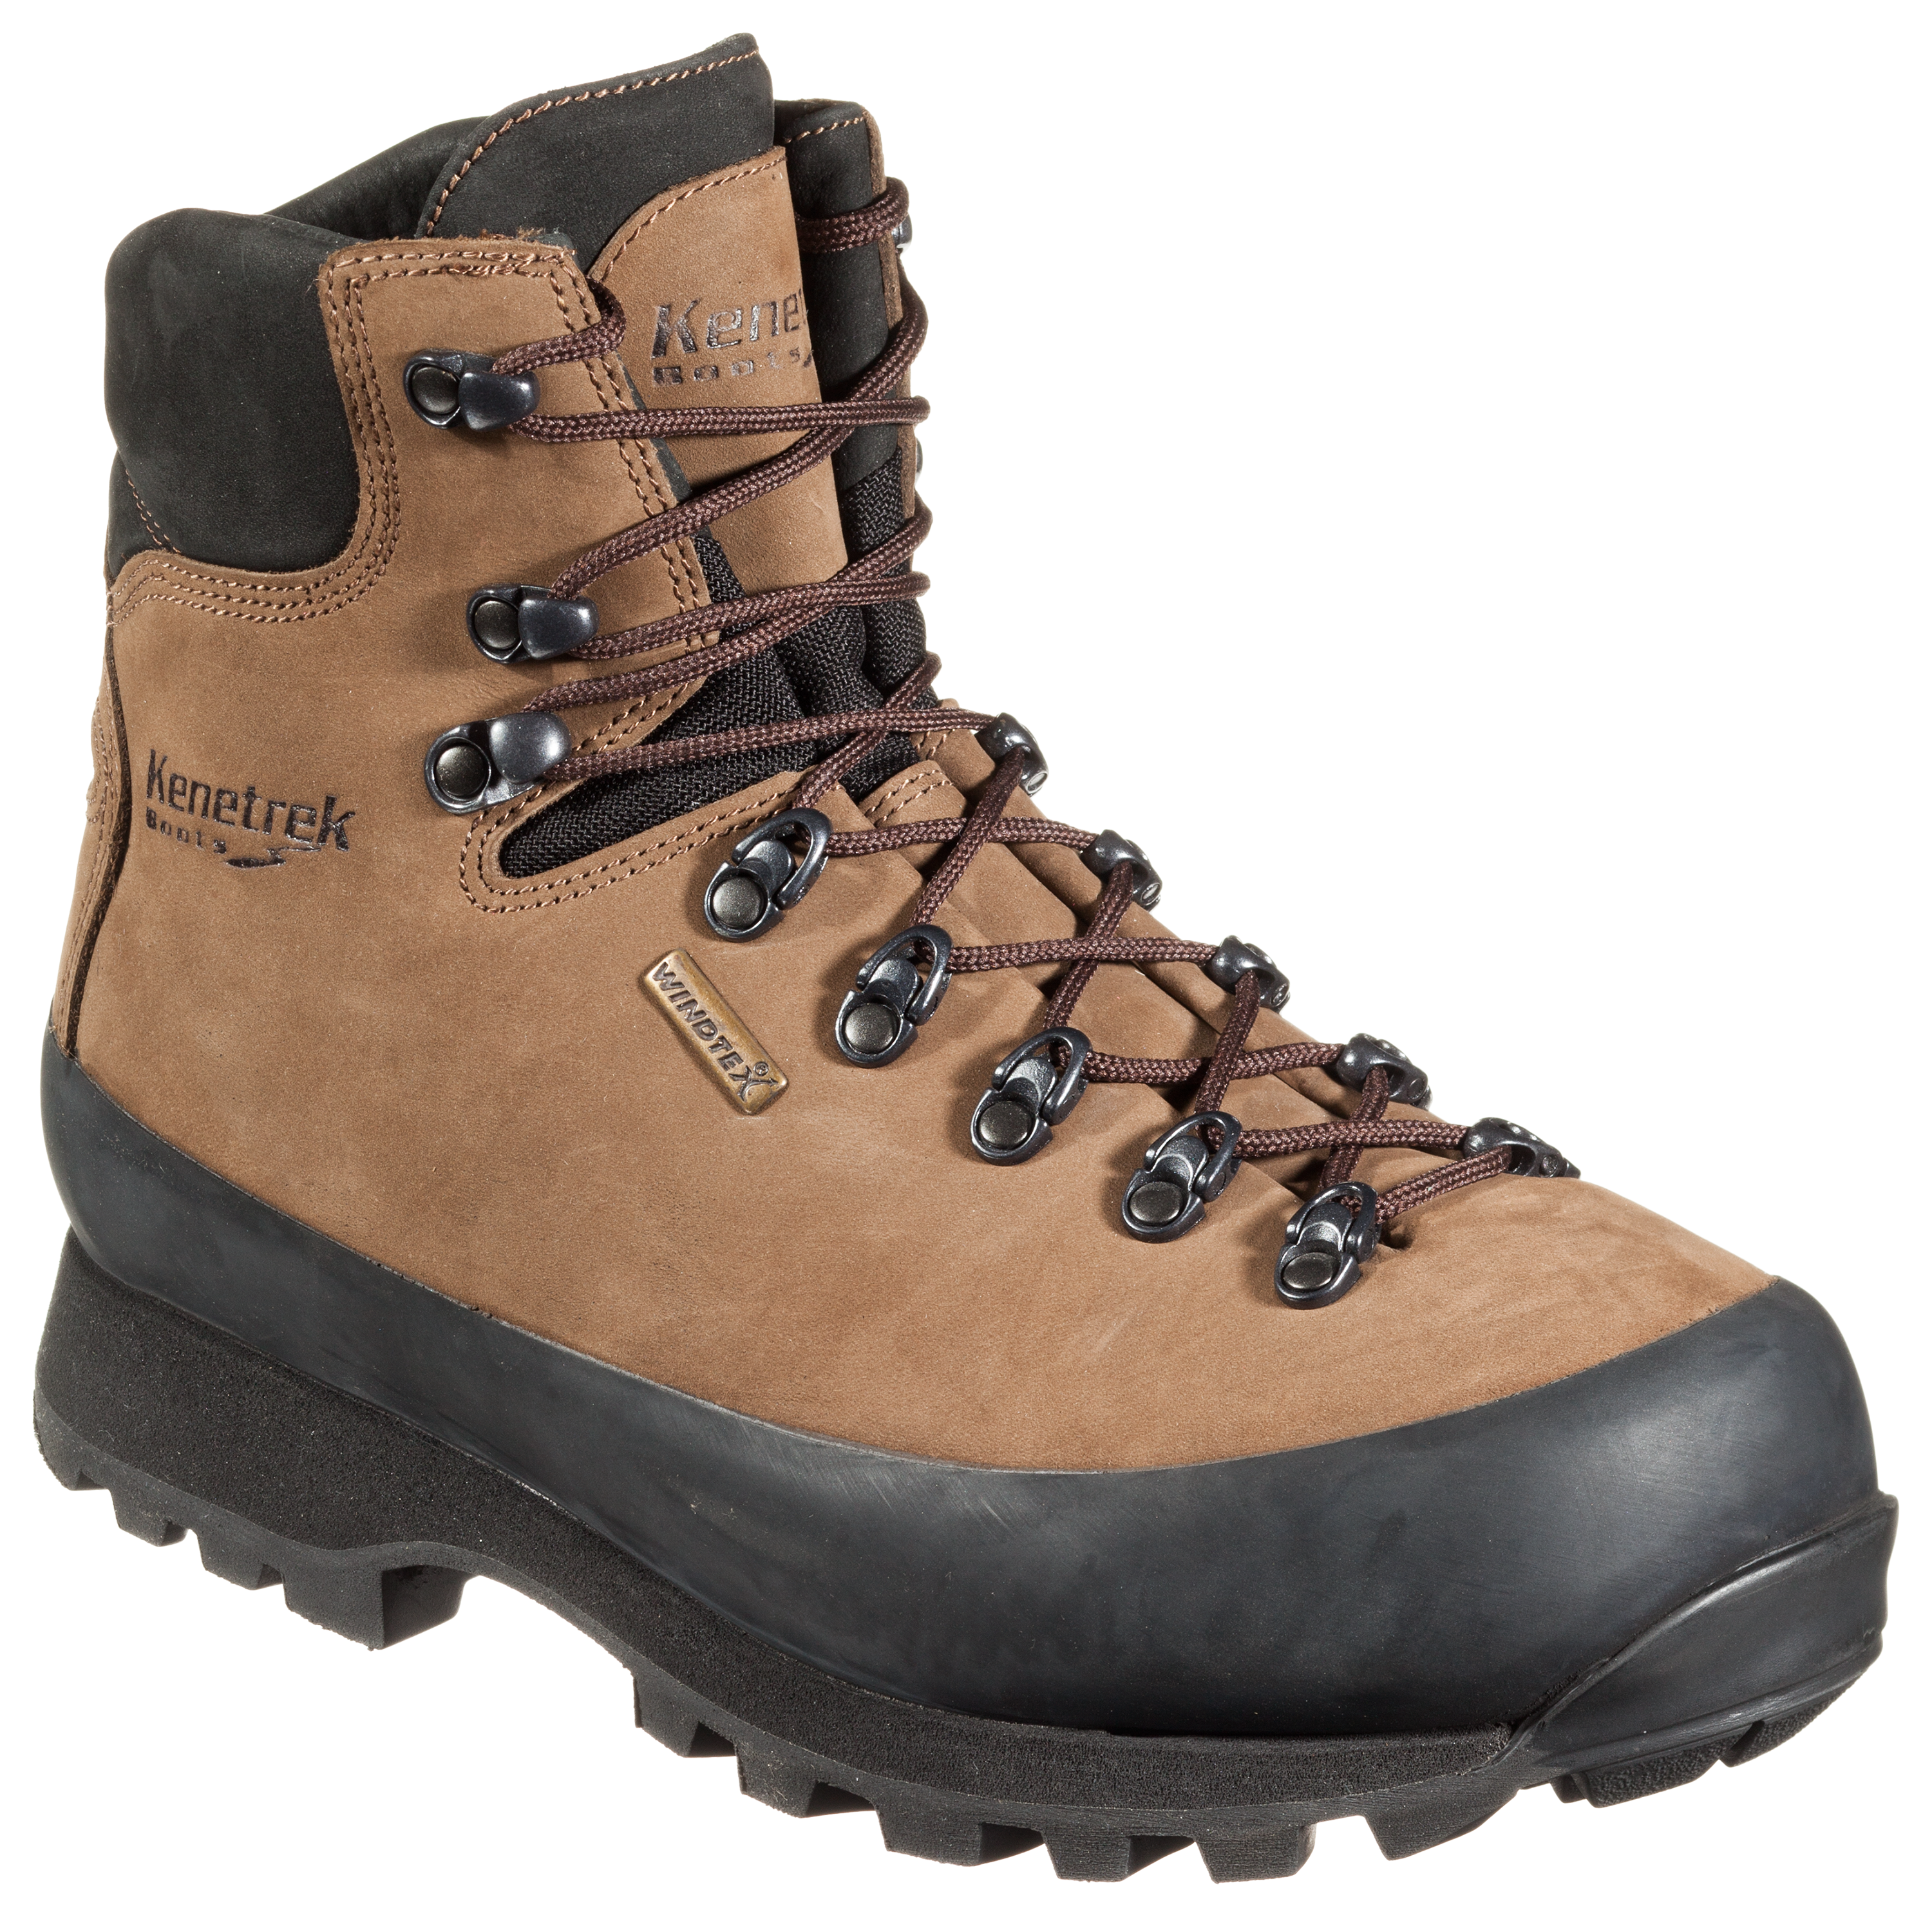 Kenetrek Hardscrabble Waterproof Hiking Boots for Men - Brown - 11.5M